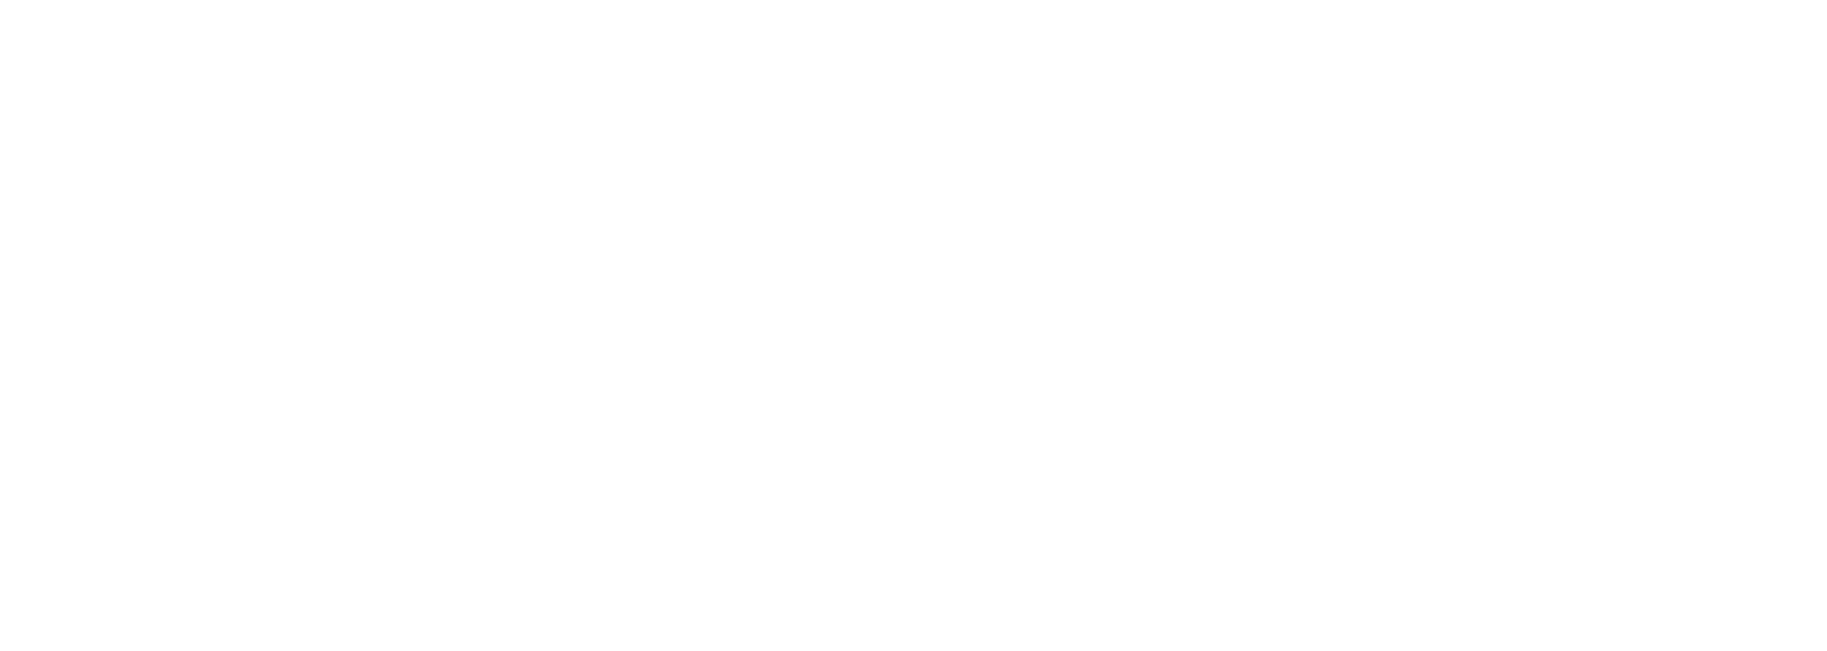 w3swebdesign and development firm